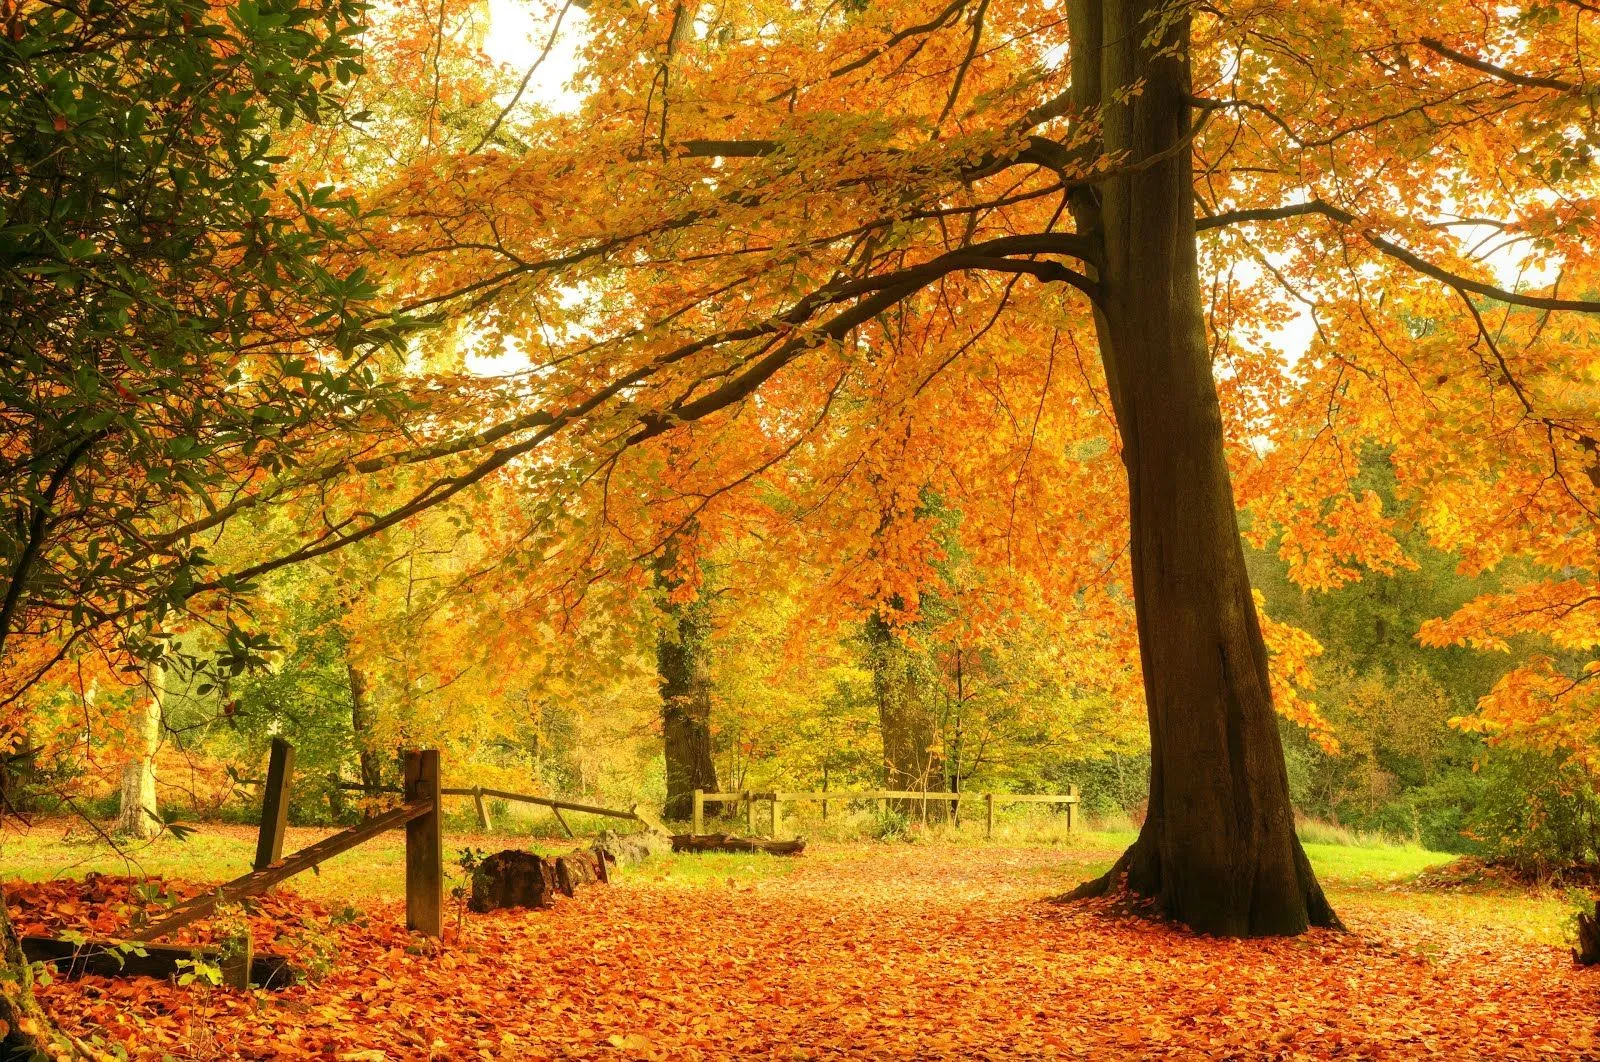 Paisajes hermosos de otoño - Imagui